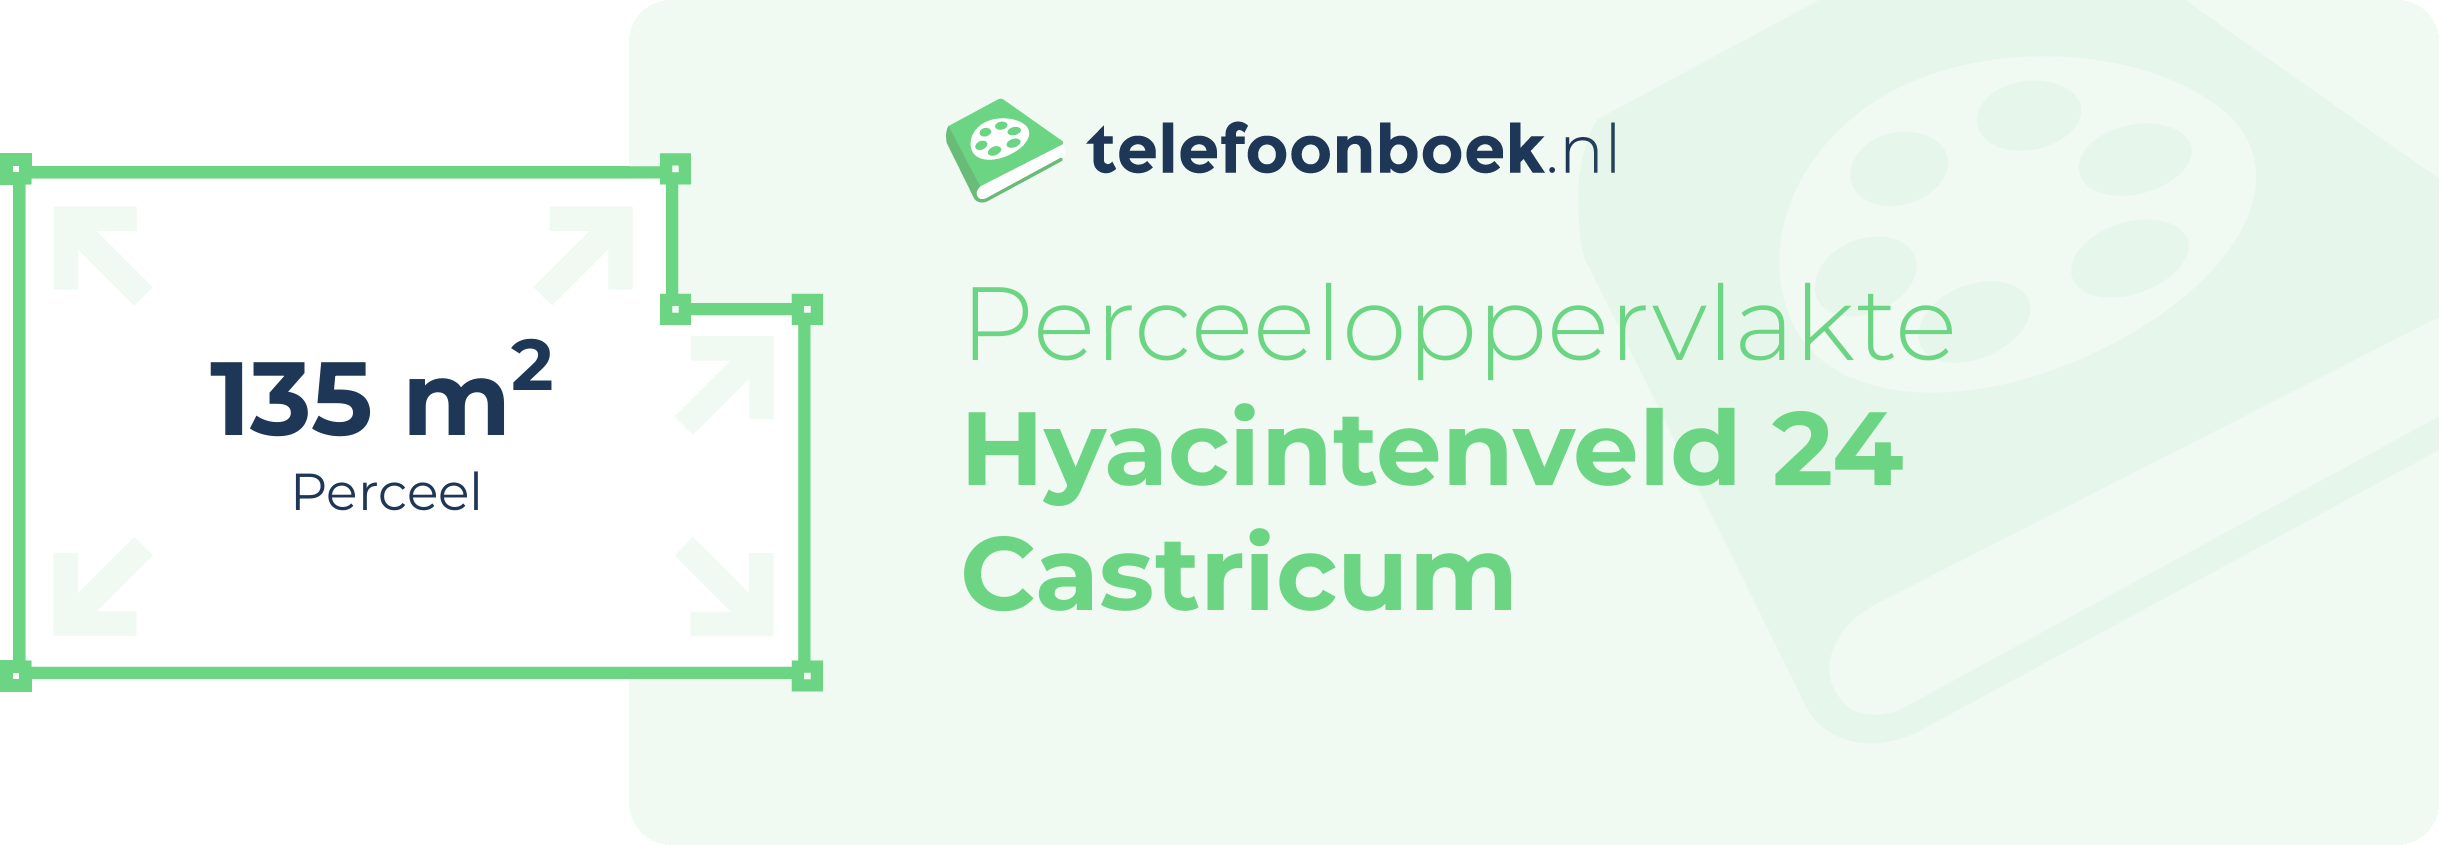 Perceeloppervlakte Hyacintenveld 24 Castricum